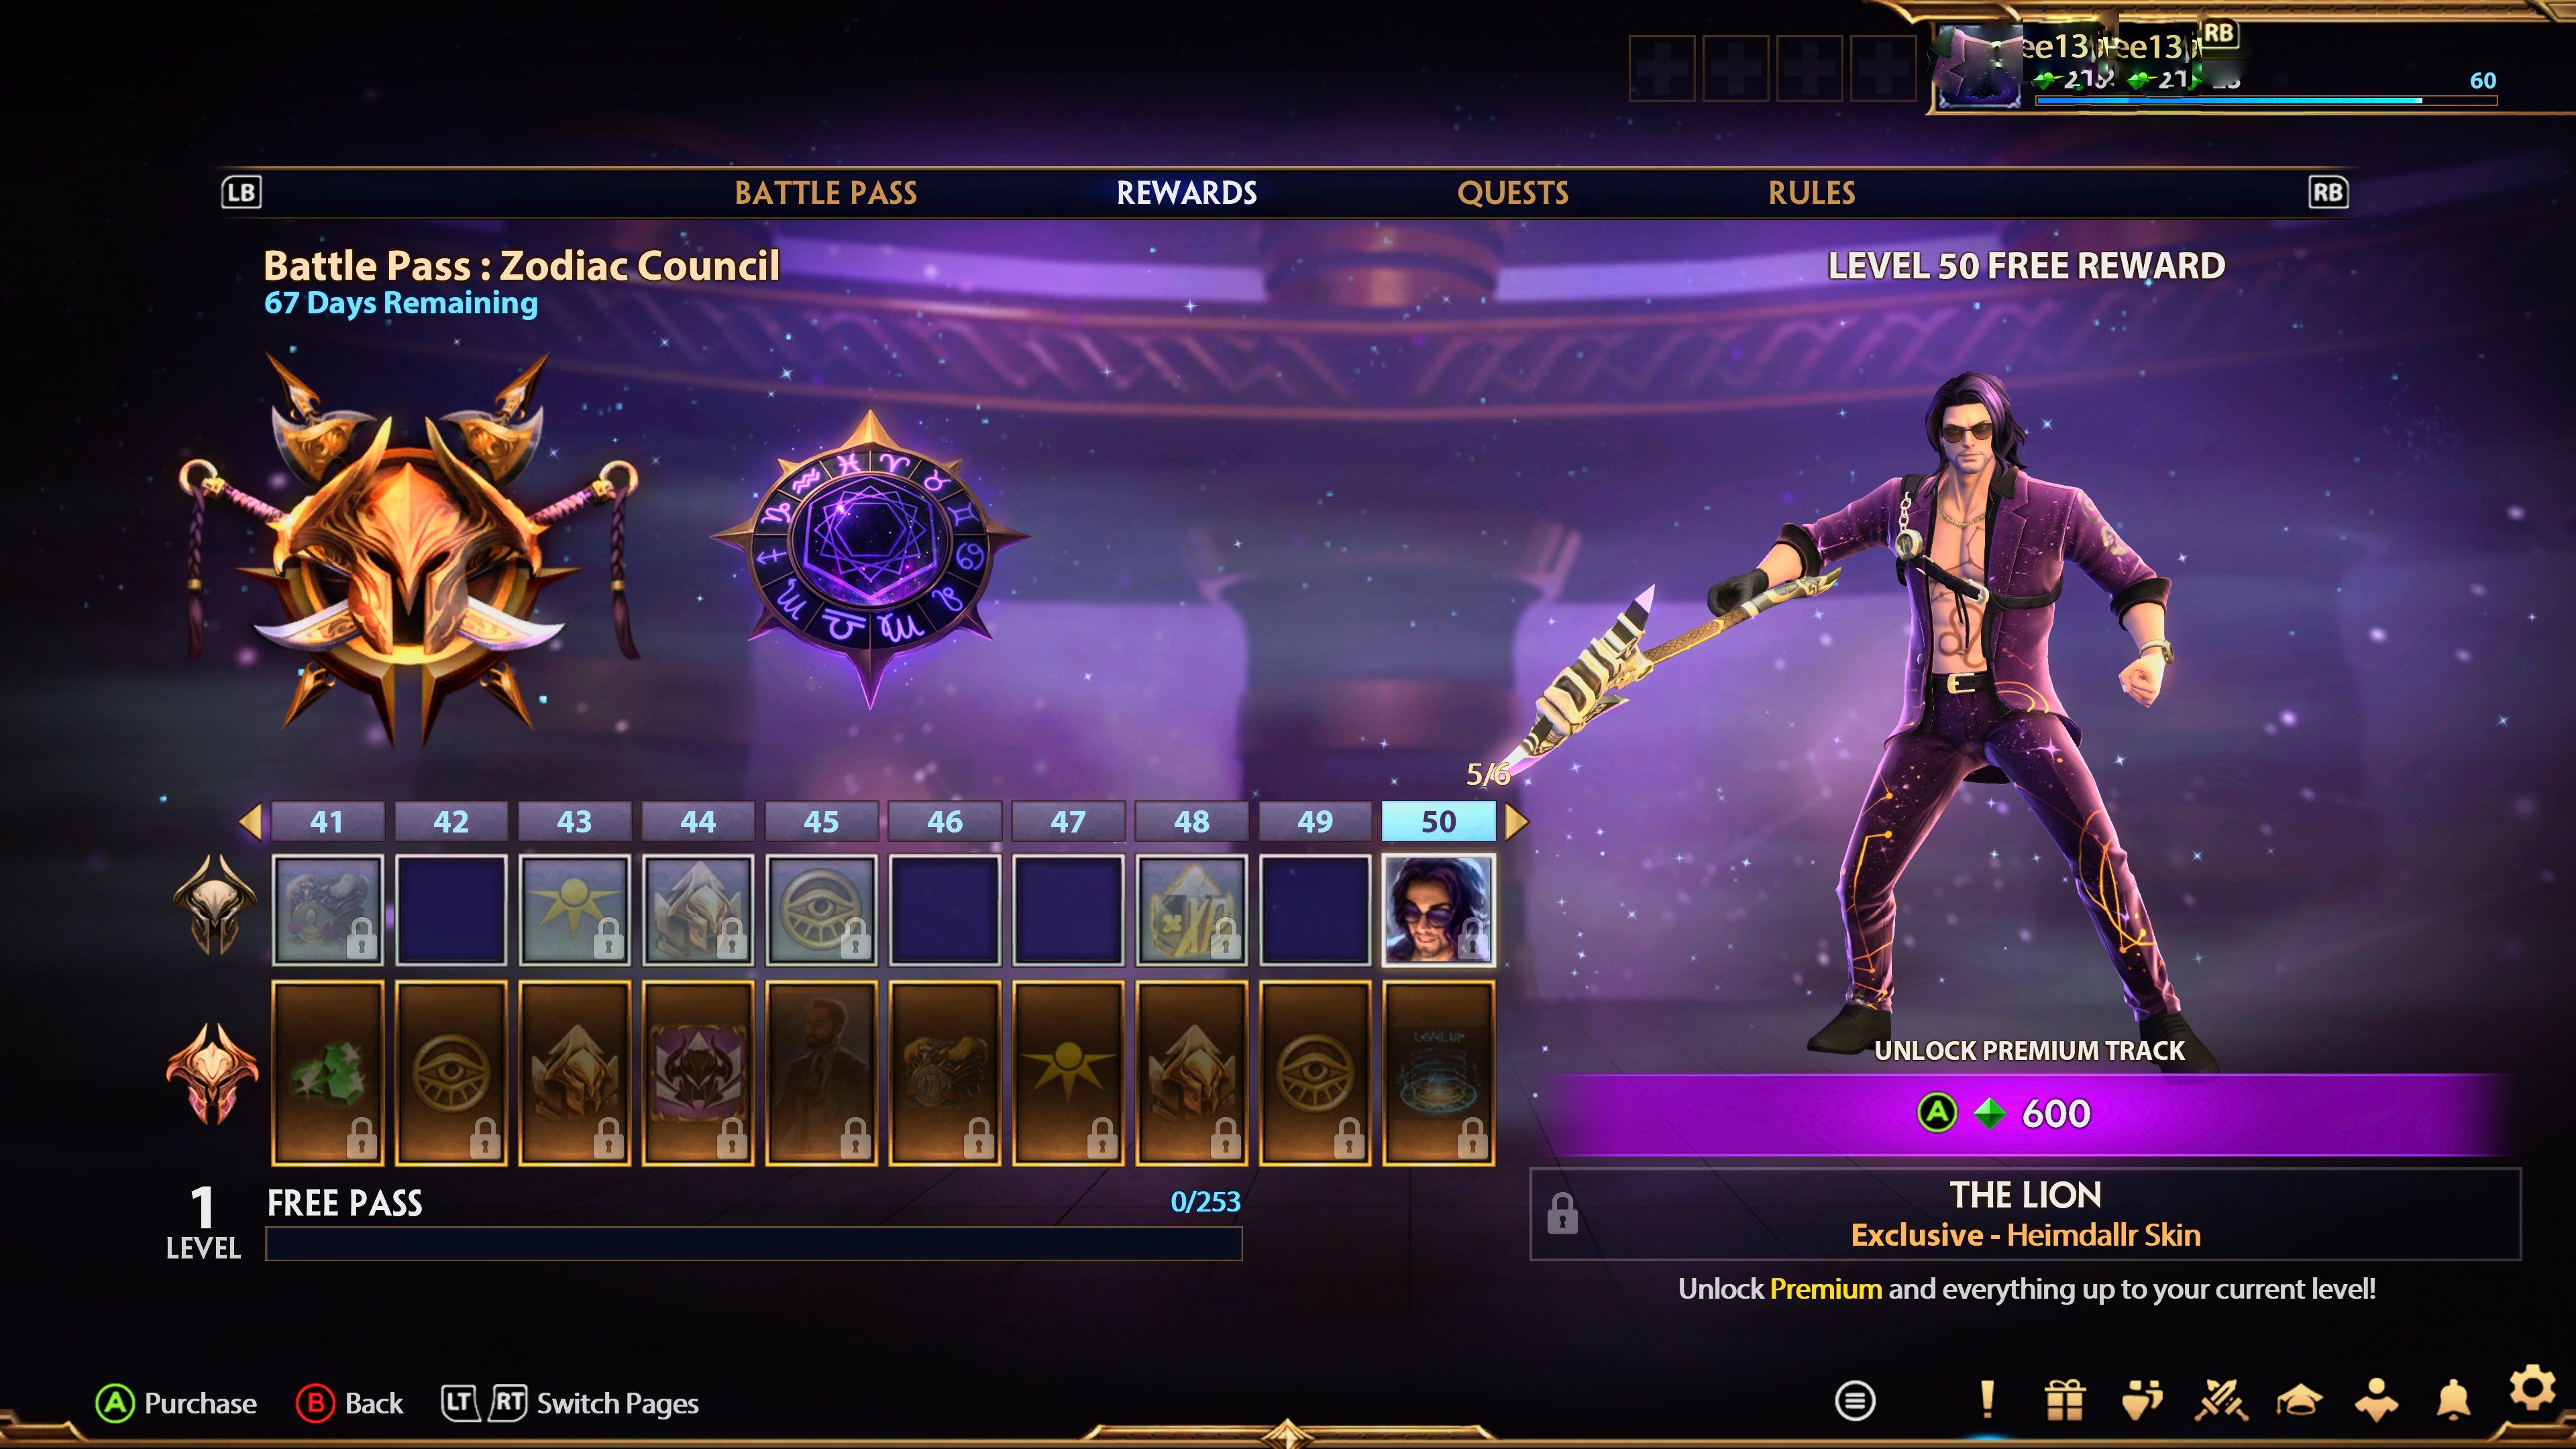 A screenshot showcasing the unlockable items in the Zodiac Council Battle Pass in Smite 